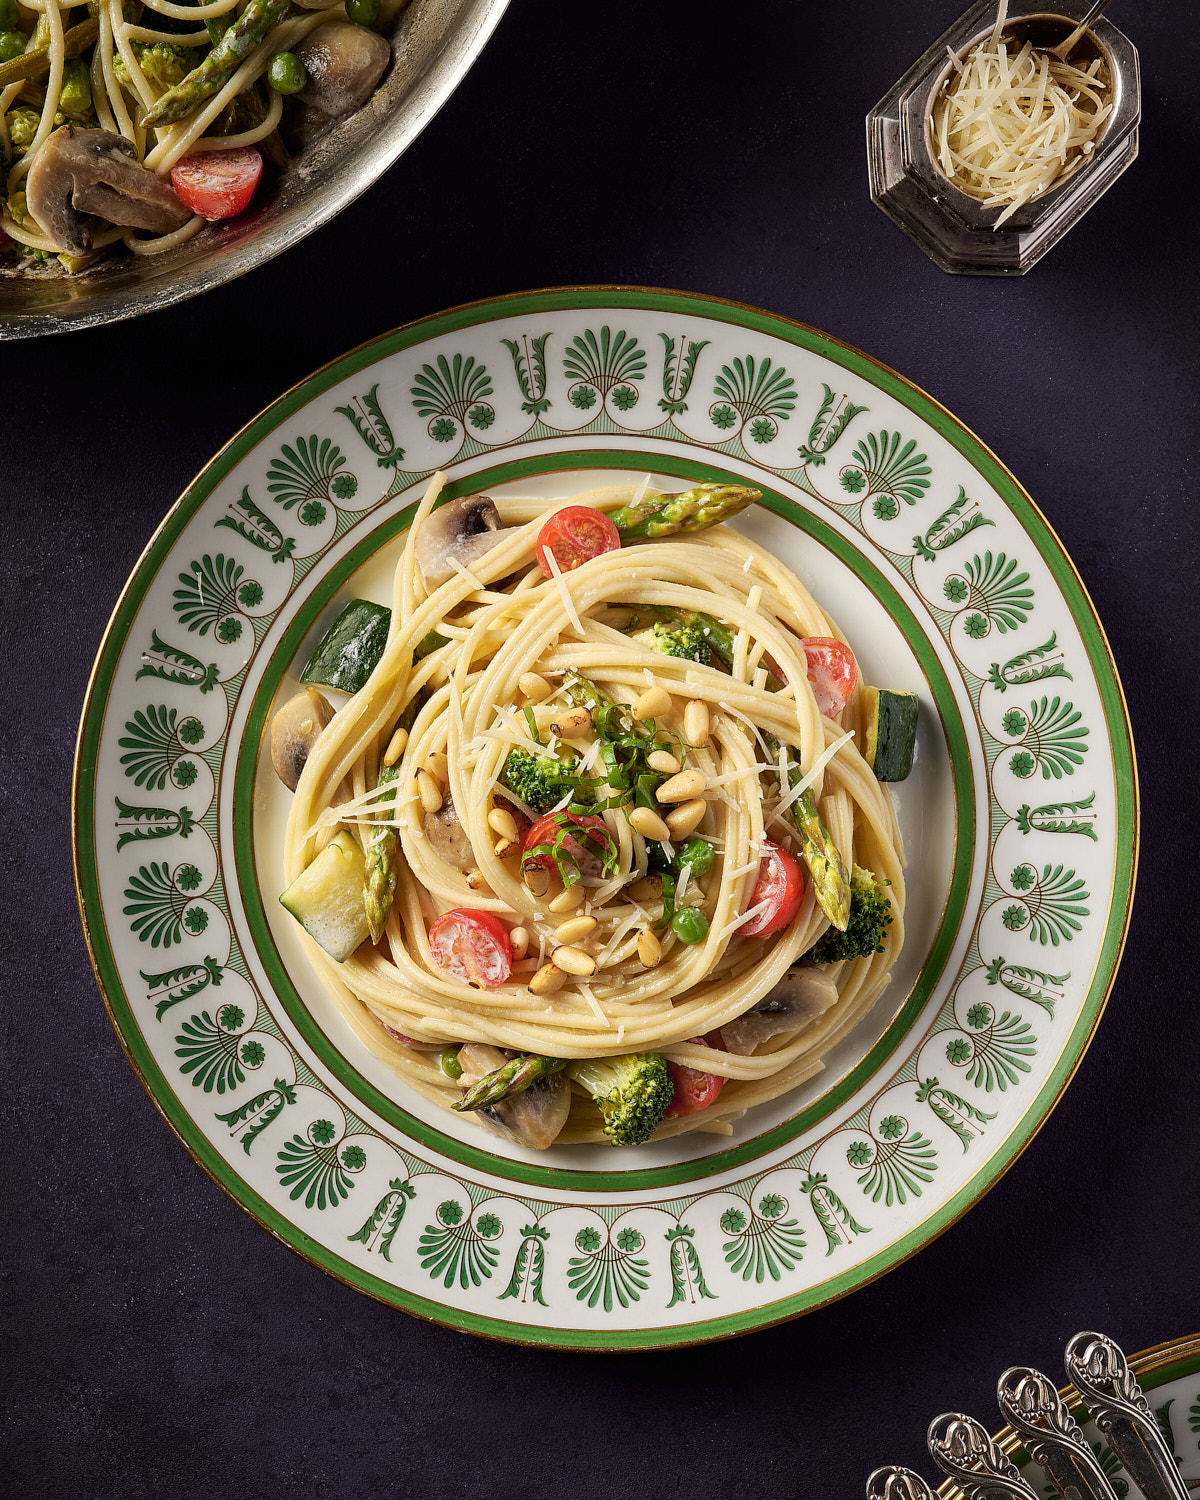 Editorial Cookbook Food Photography of Pasta Primavera